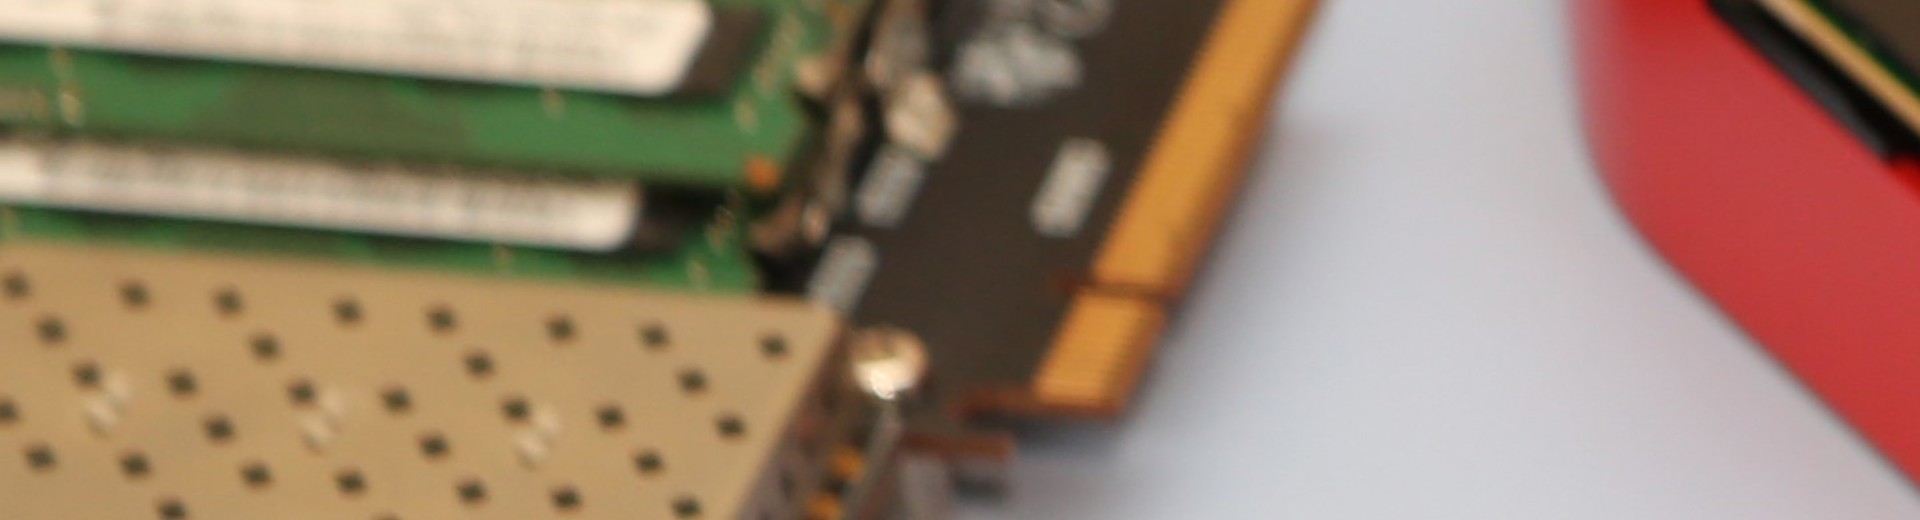 Electronics circuitboard